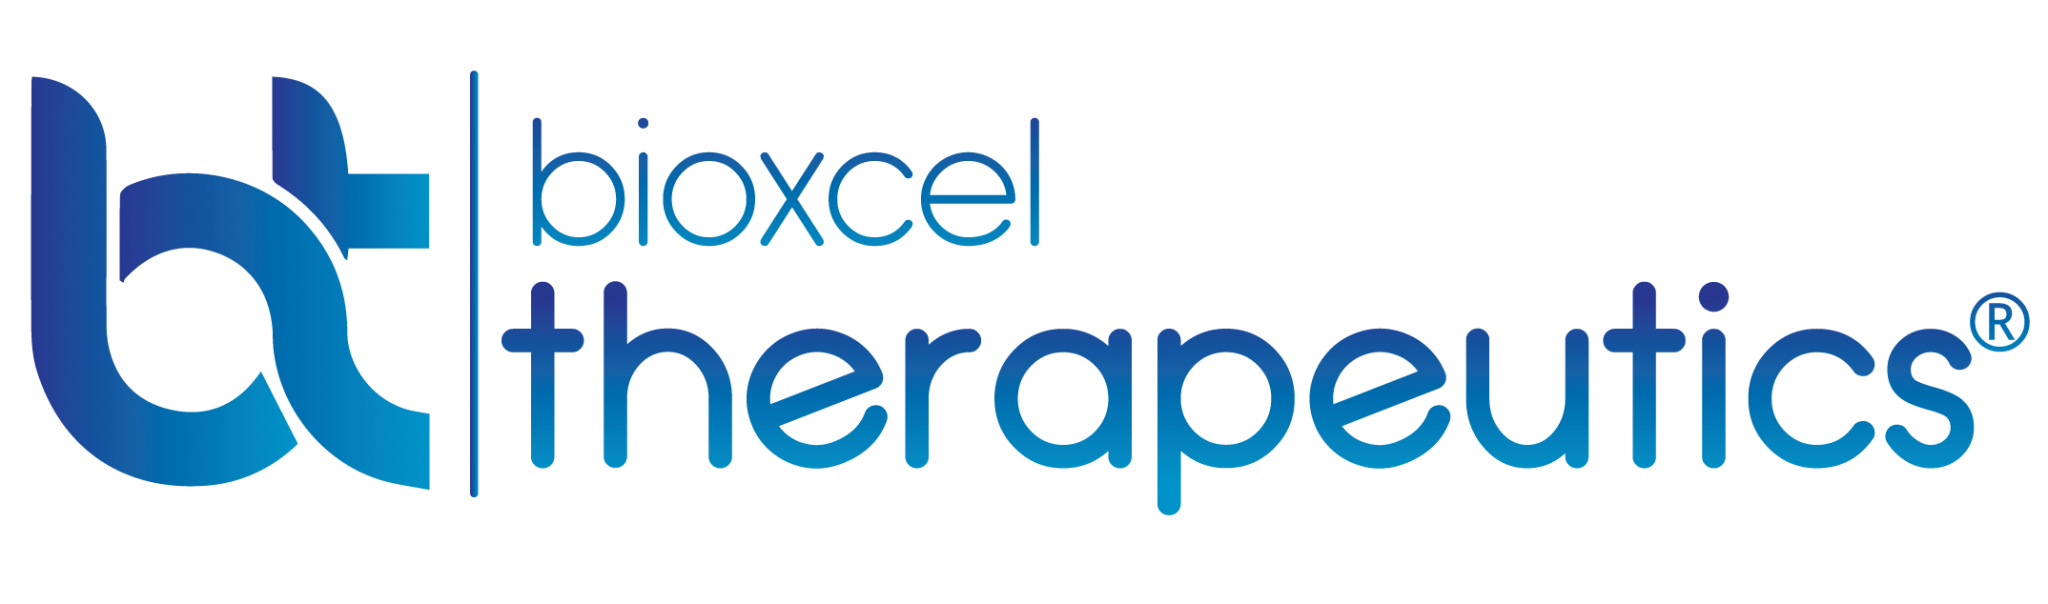 Bioxcel Therapeutics logo